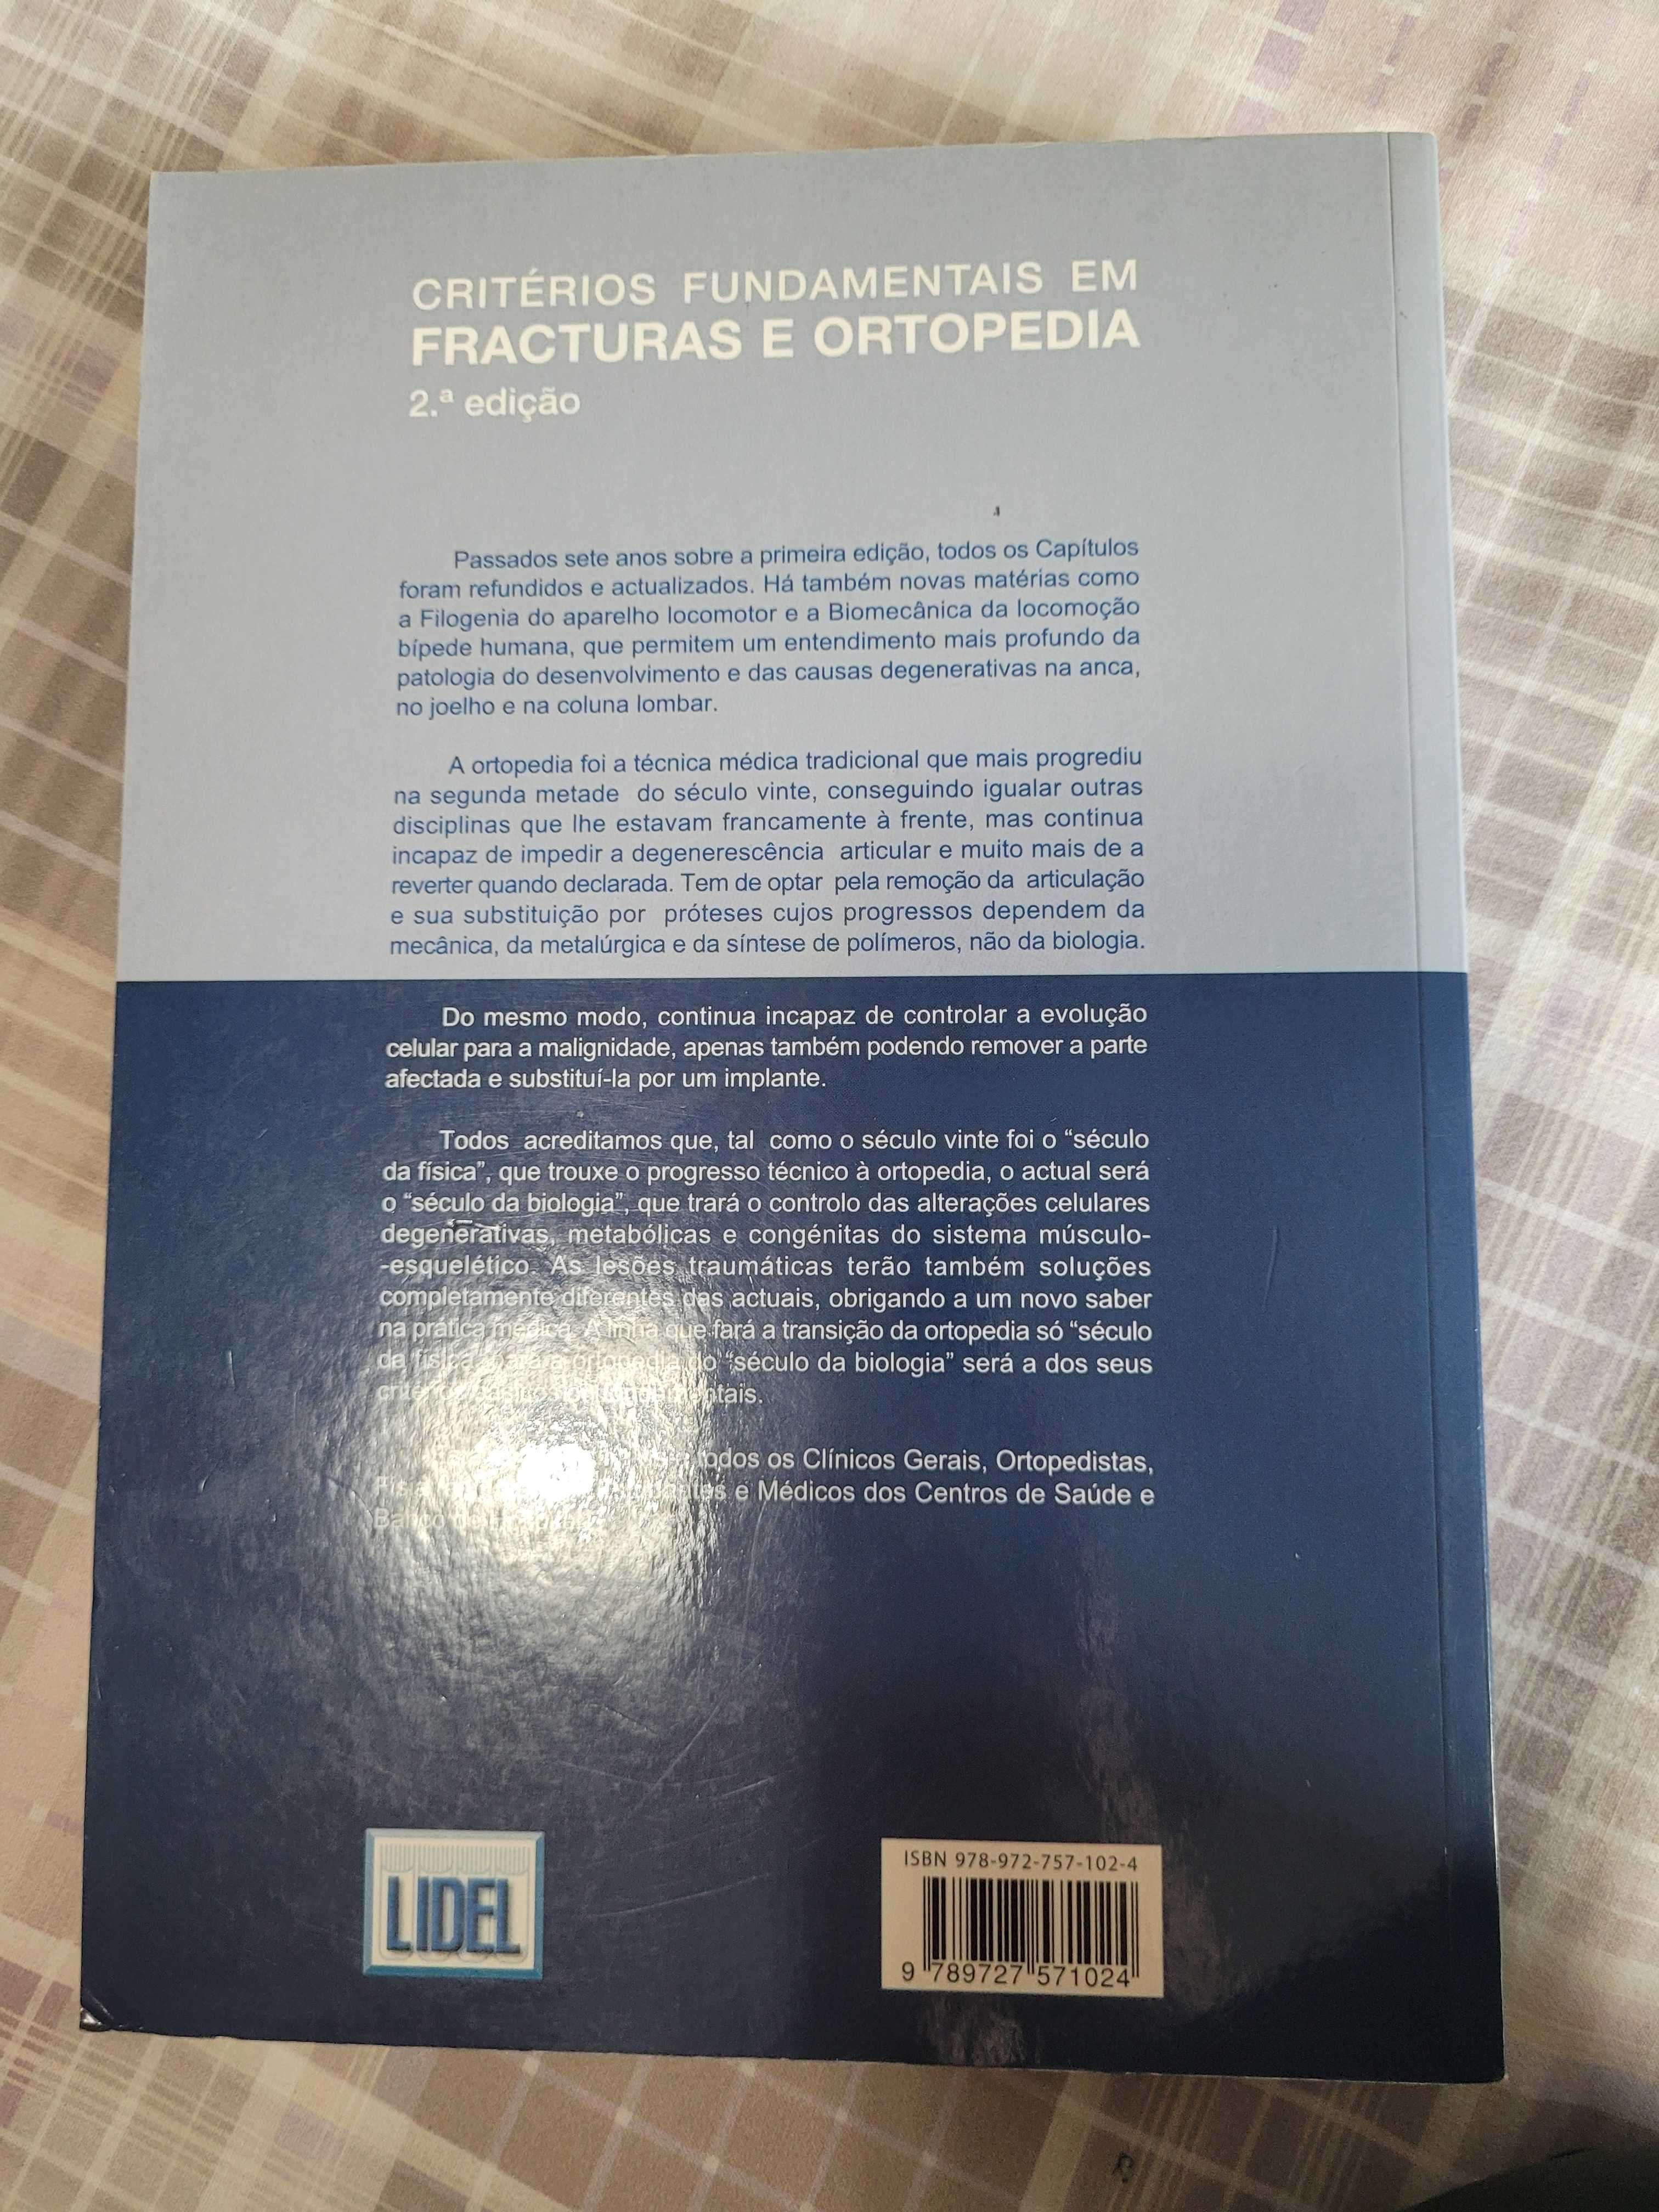 Livro Medicina "Critérios Fundamentais em Fracturas e Ortopedia"